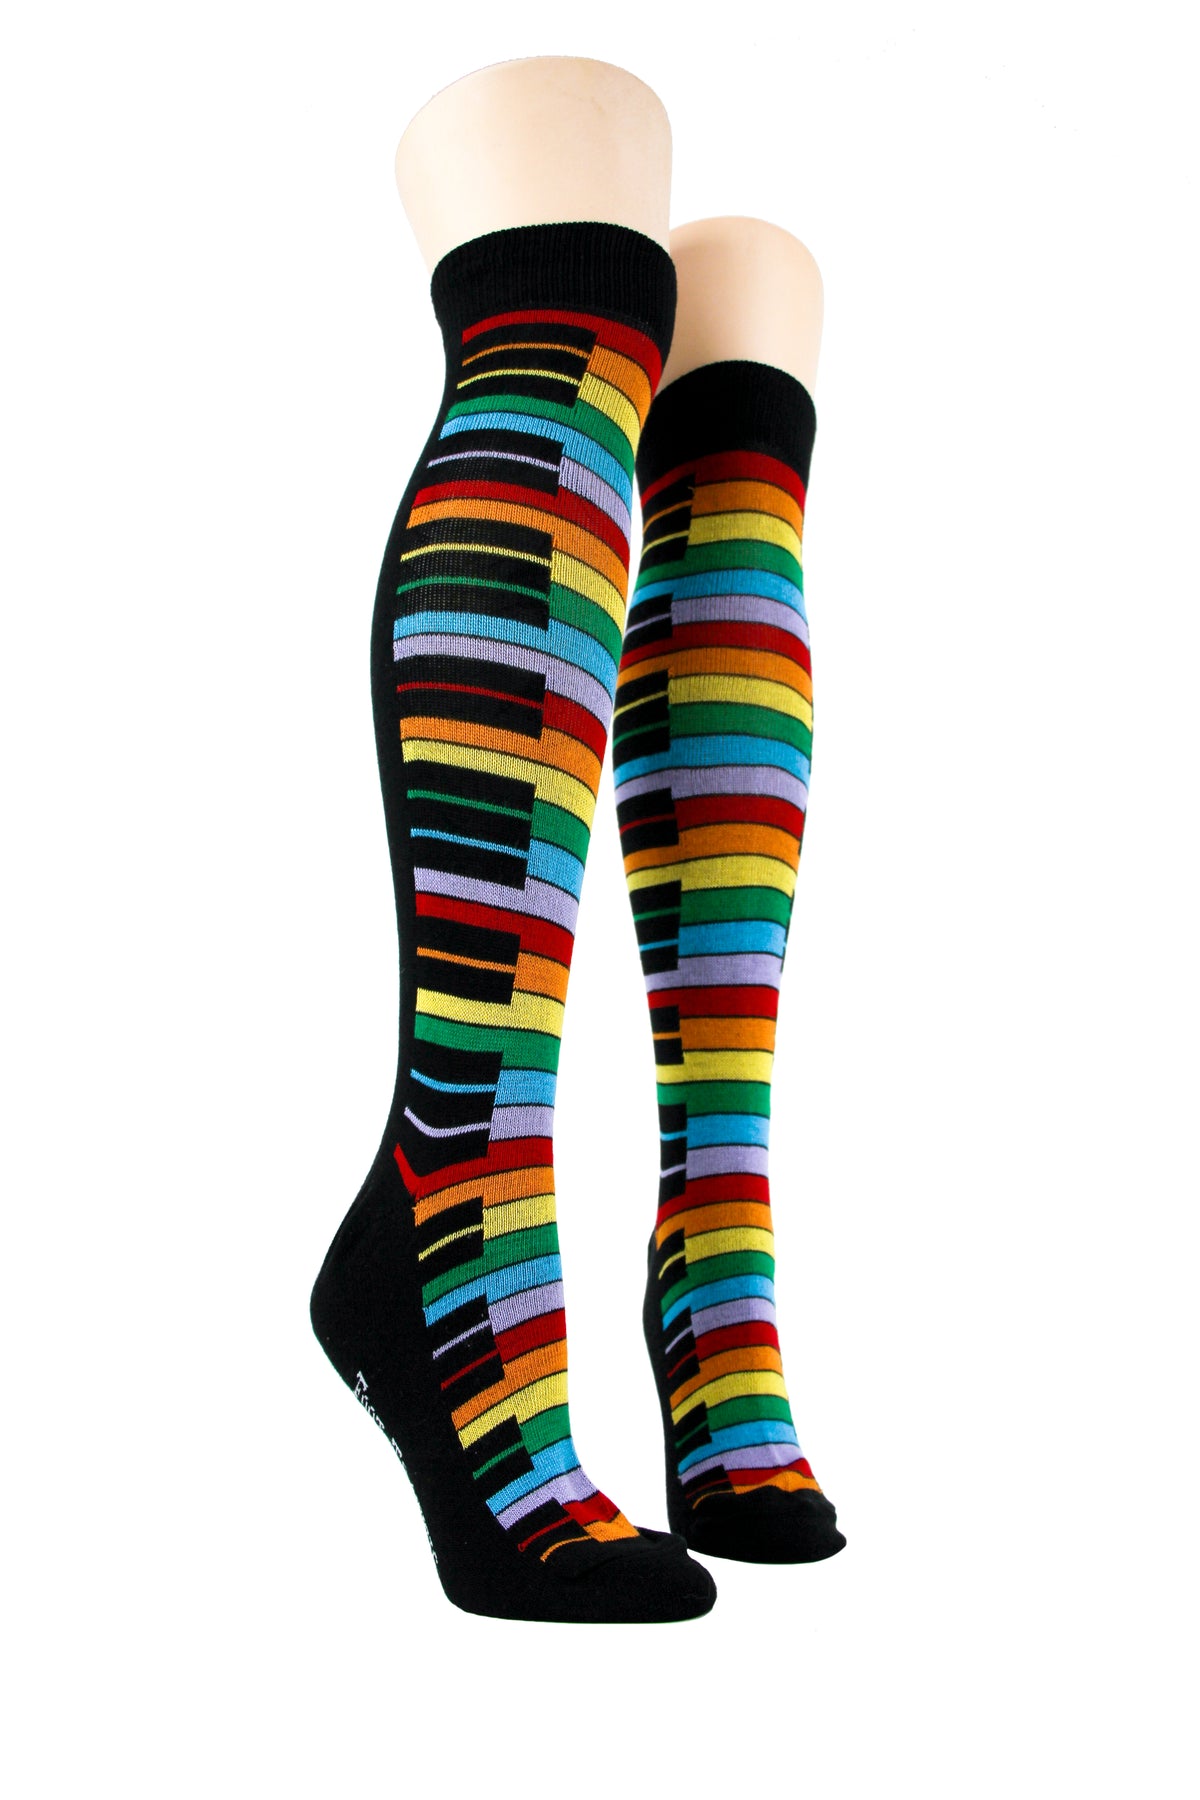 Socks: Rainbow Piano Keyboard Knee High Design - women's